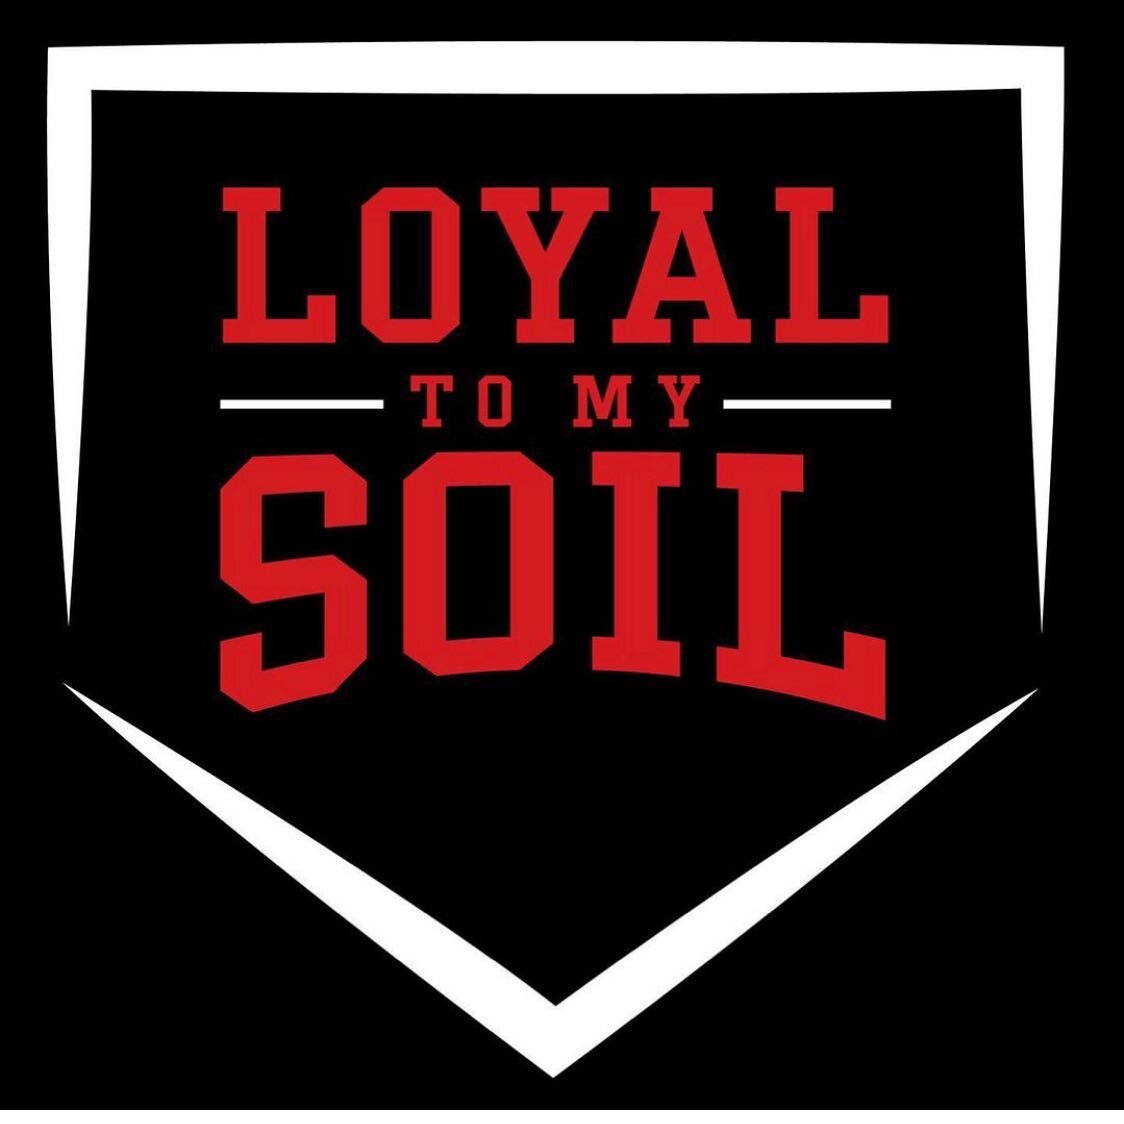 Follow @_loyal_to_my_soil_ 
Real good look!!!
@tysonross_38 @_jross21 @coachbjguinn @realjemileweeks @windycity_revolutiontv 
@toptiernorcal @e40